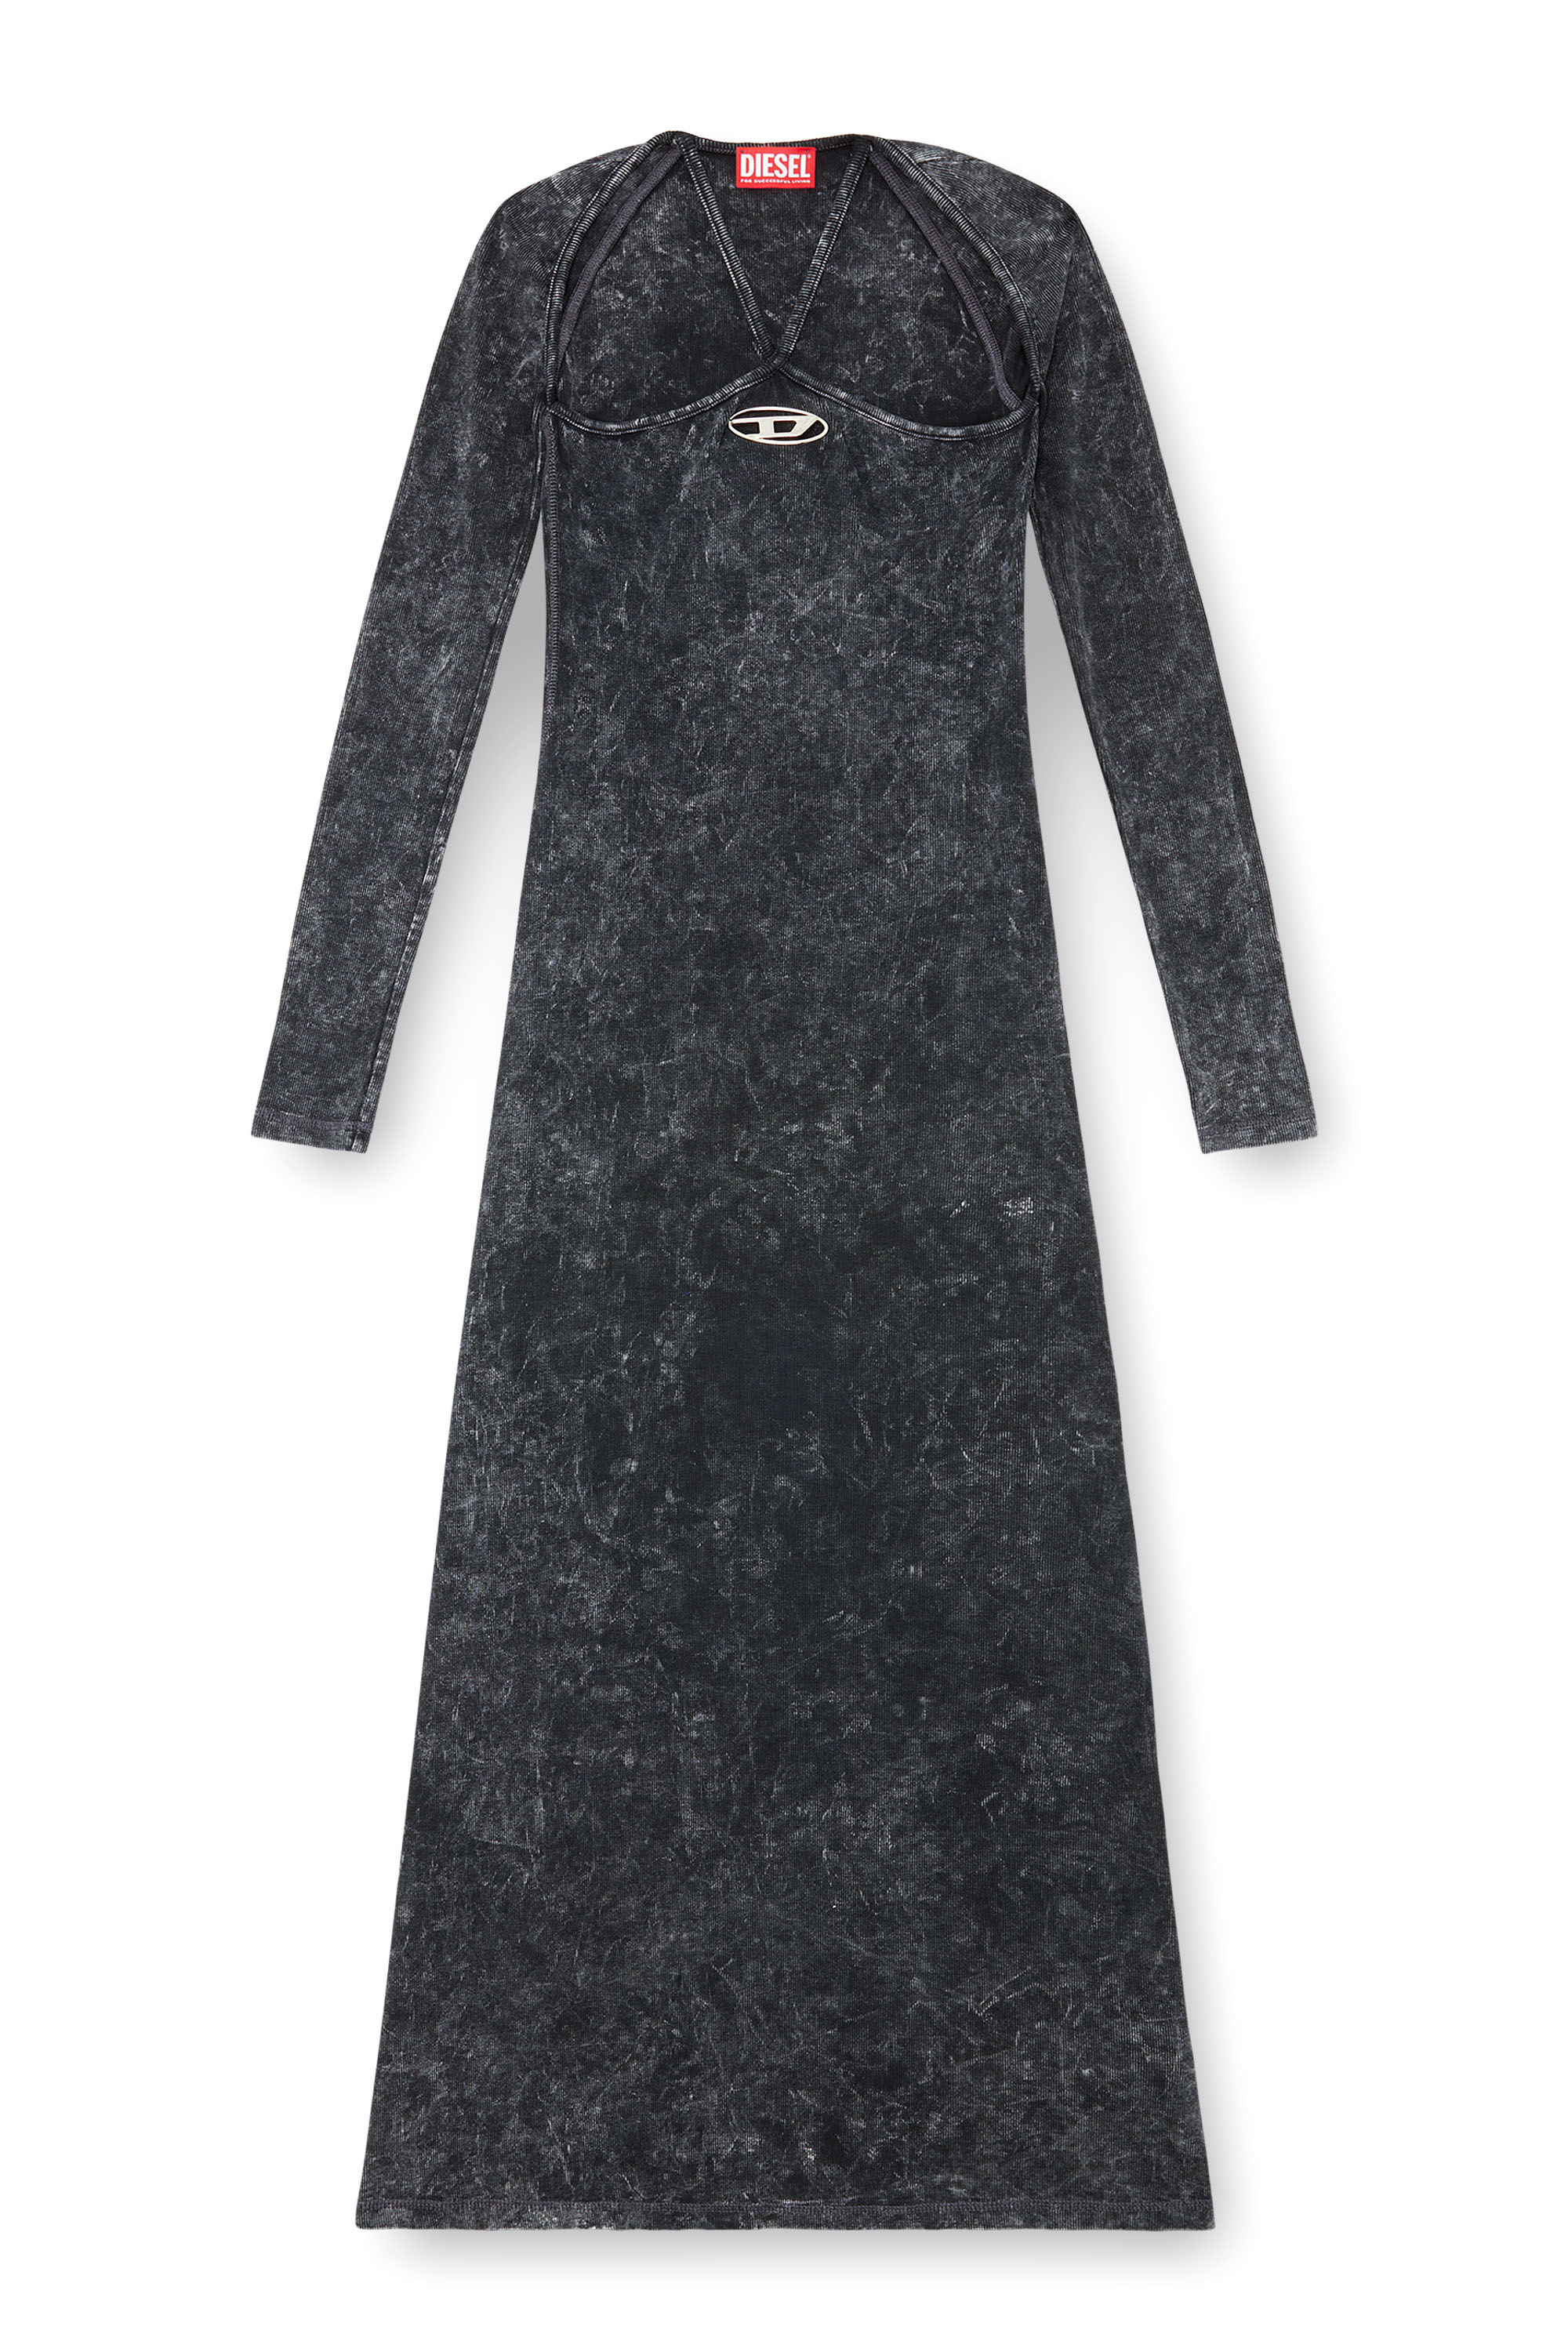 Diesel - D-MARINEL, Damen Langes Kleid in marmorierter Optik in Schwarz - Image 1